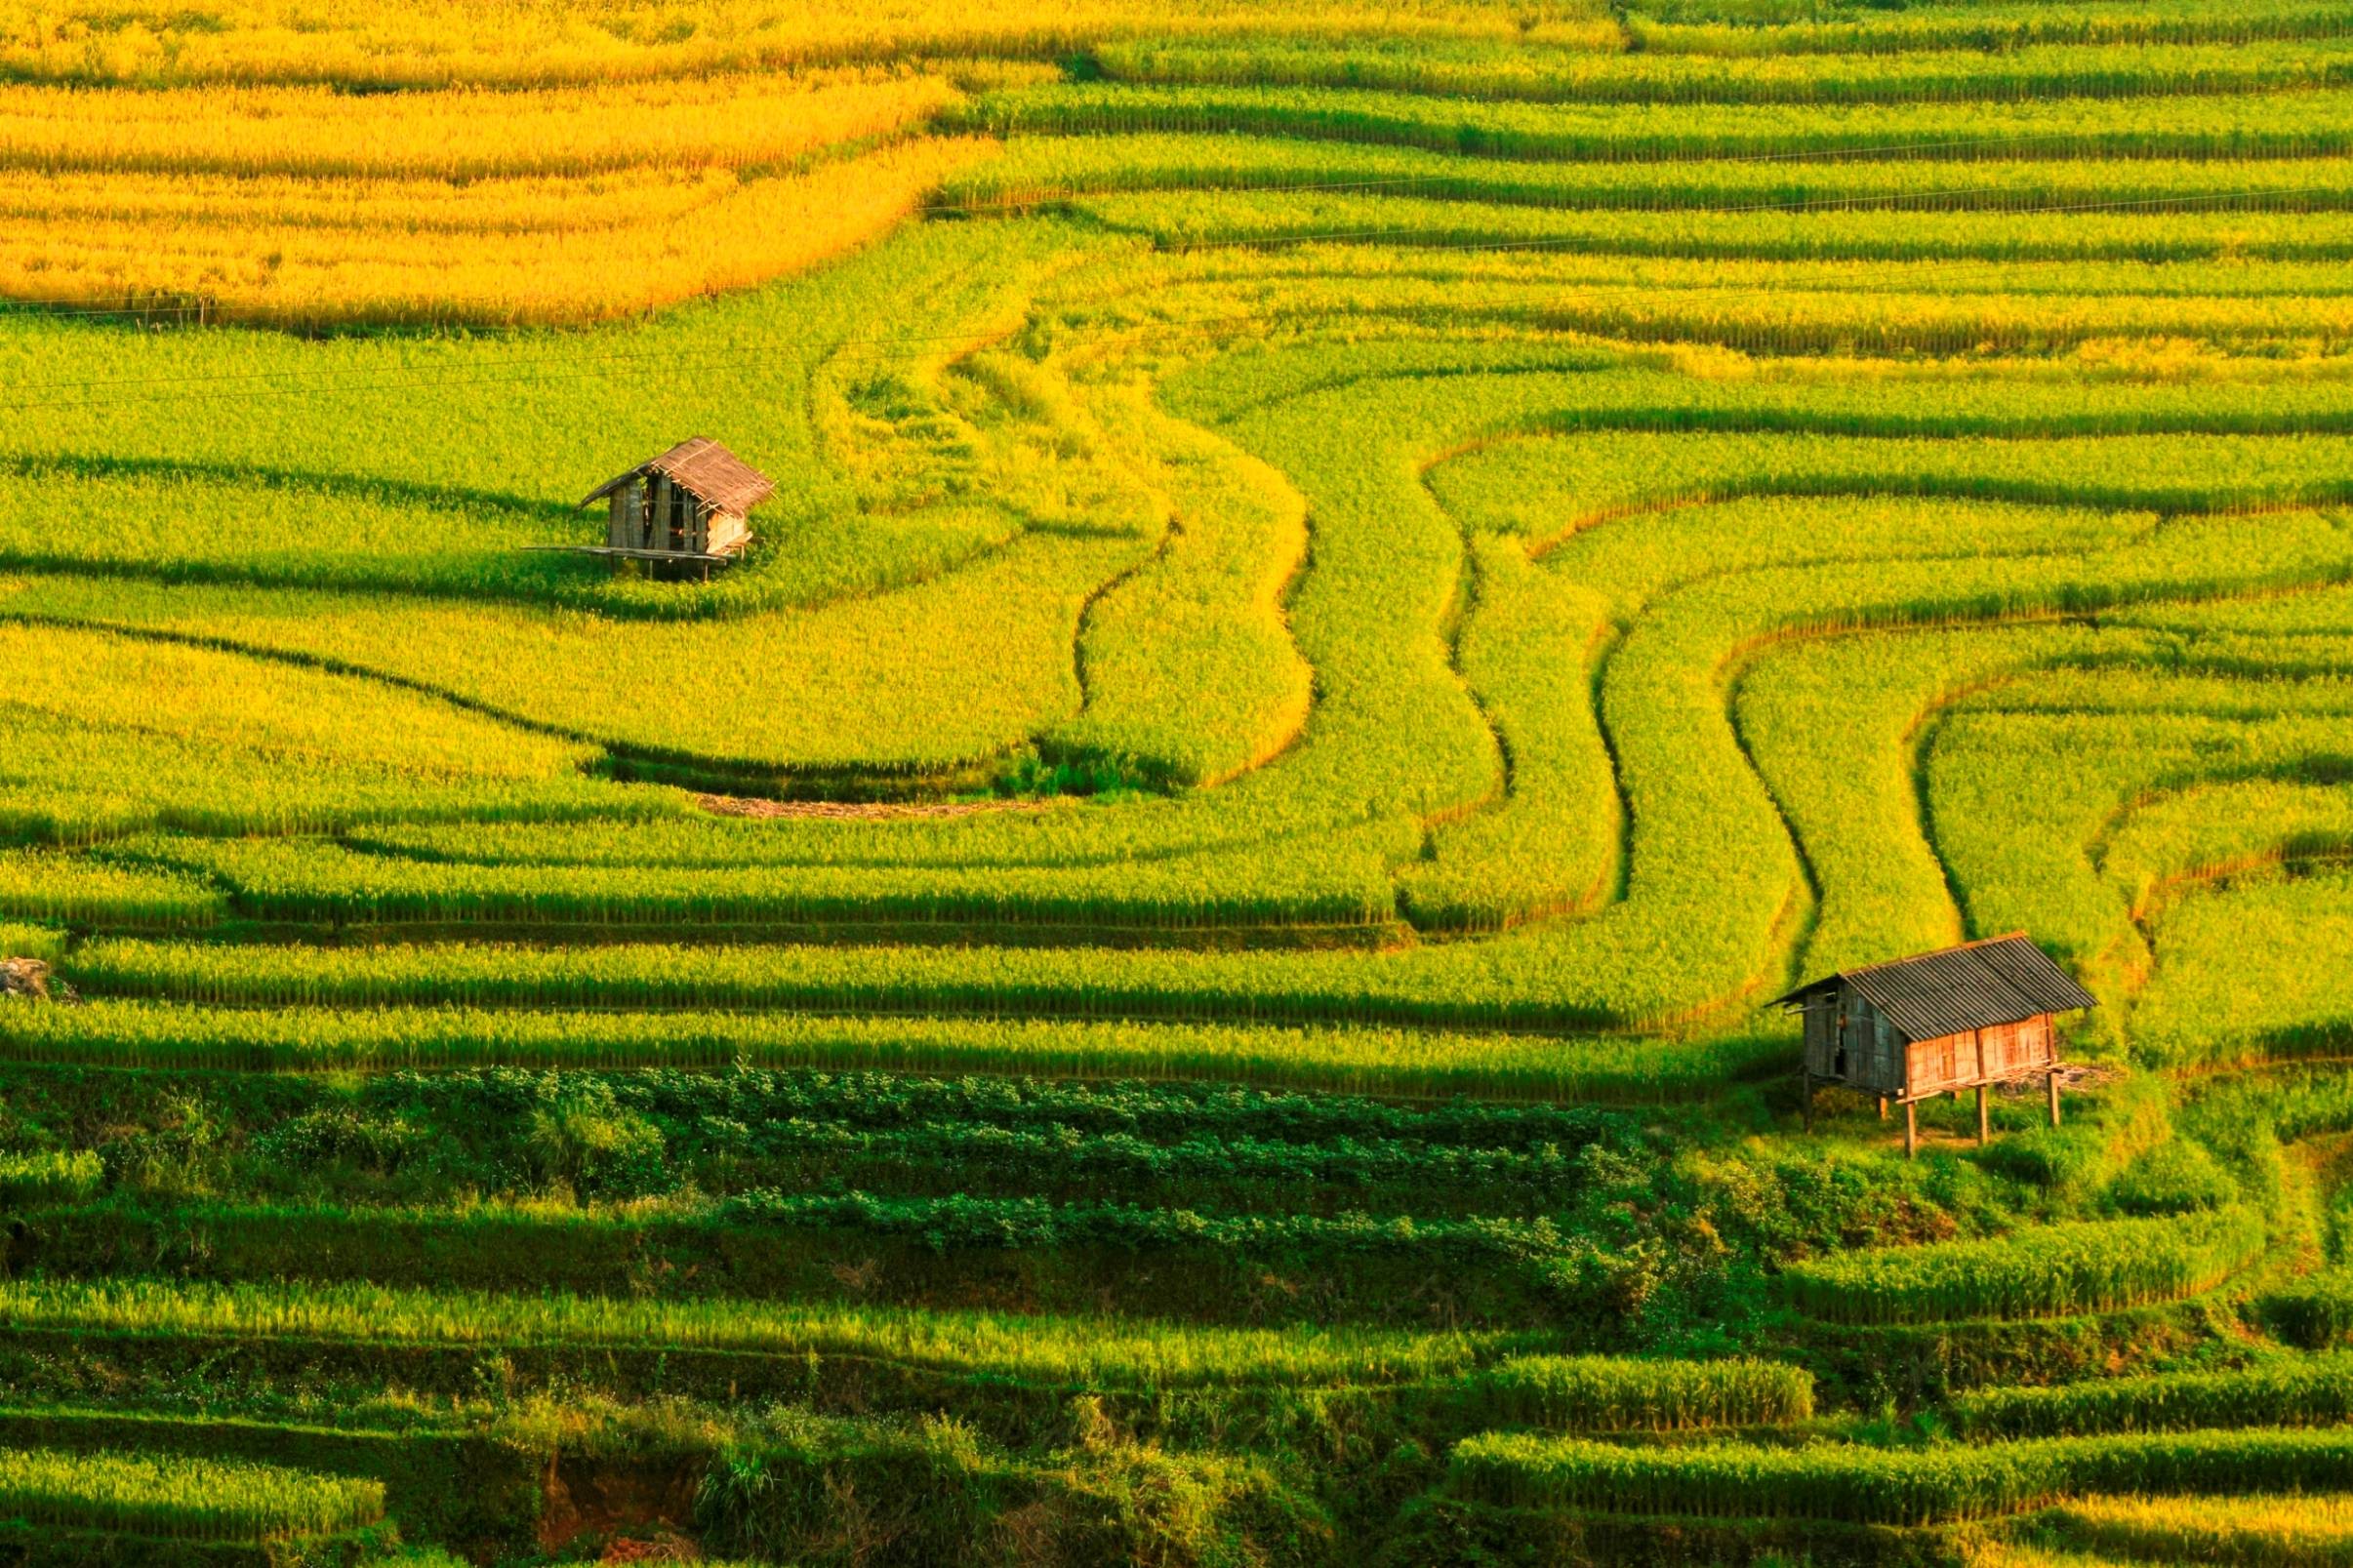 Rice Paddy Fields